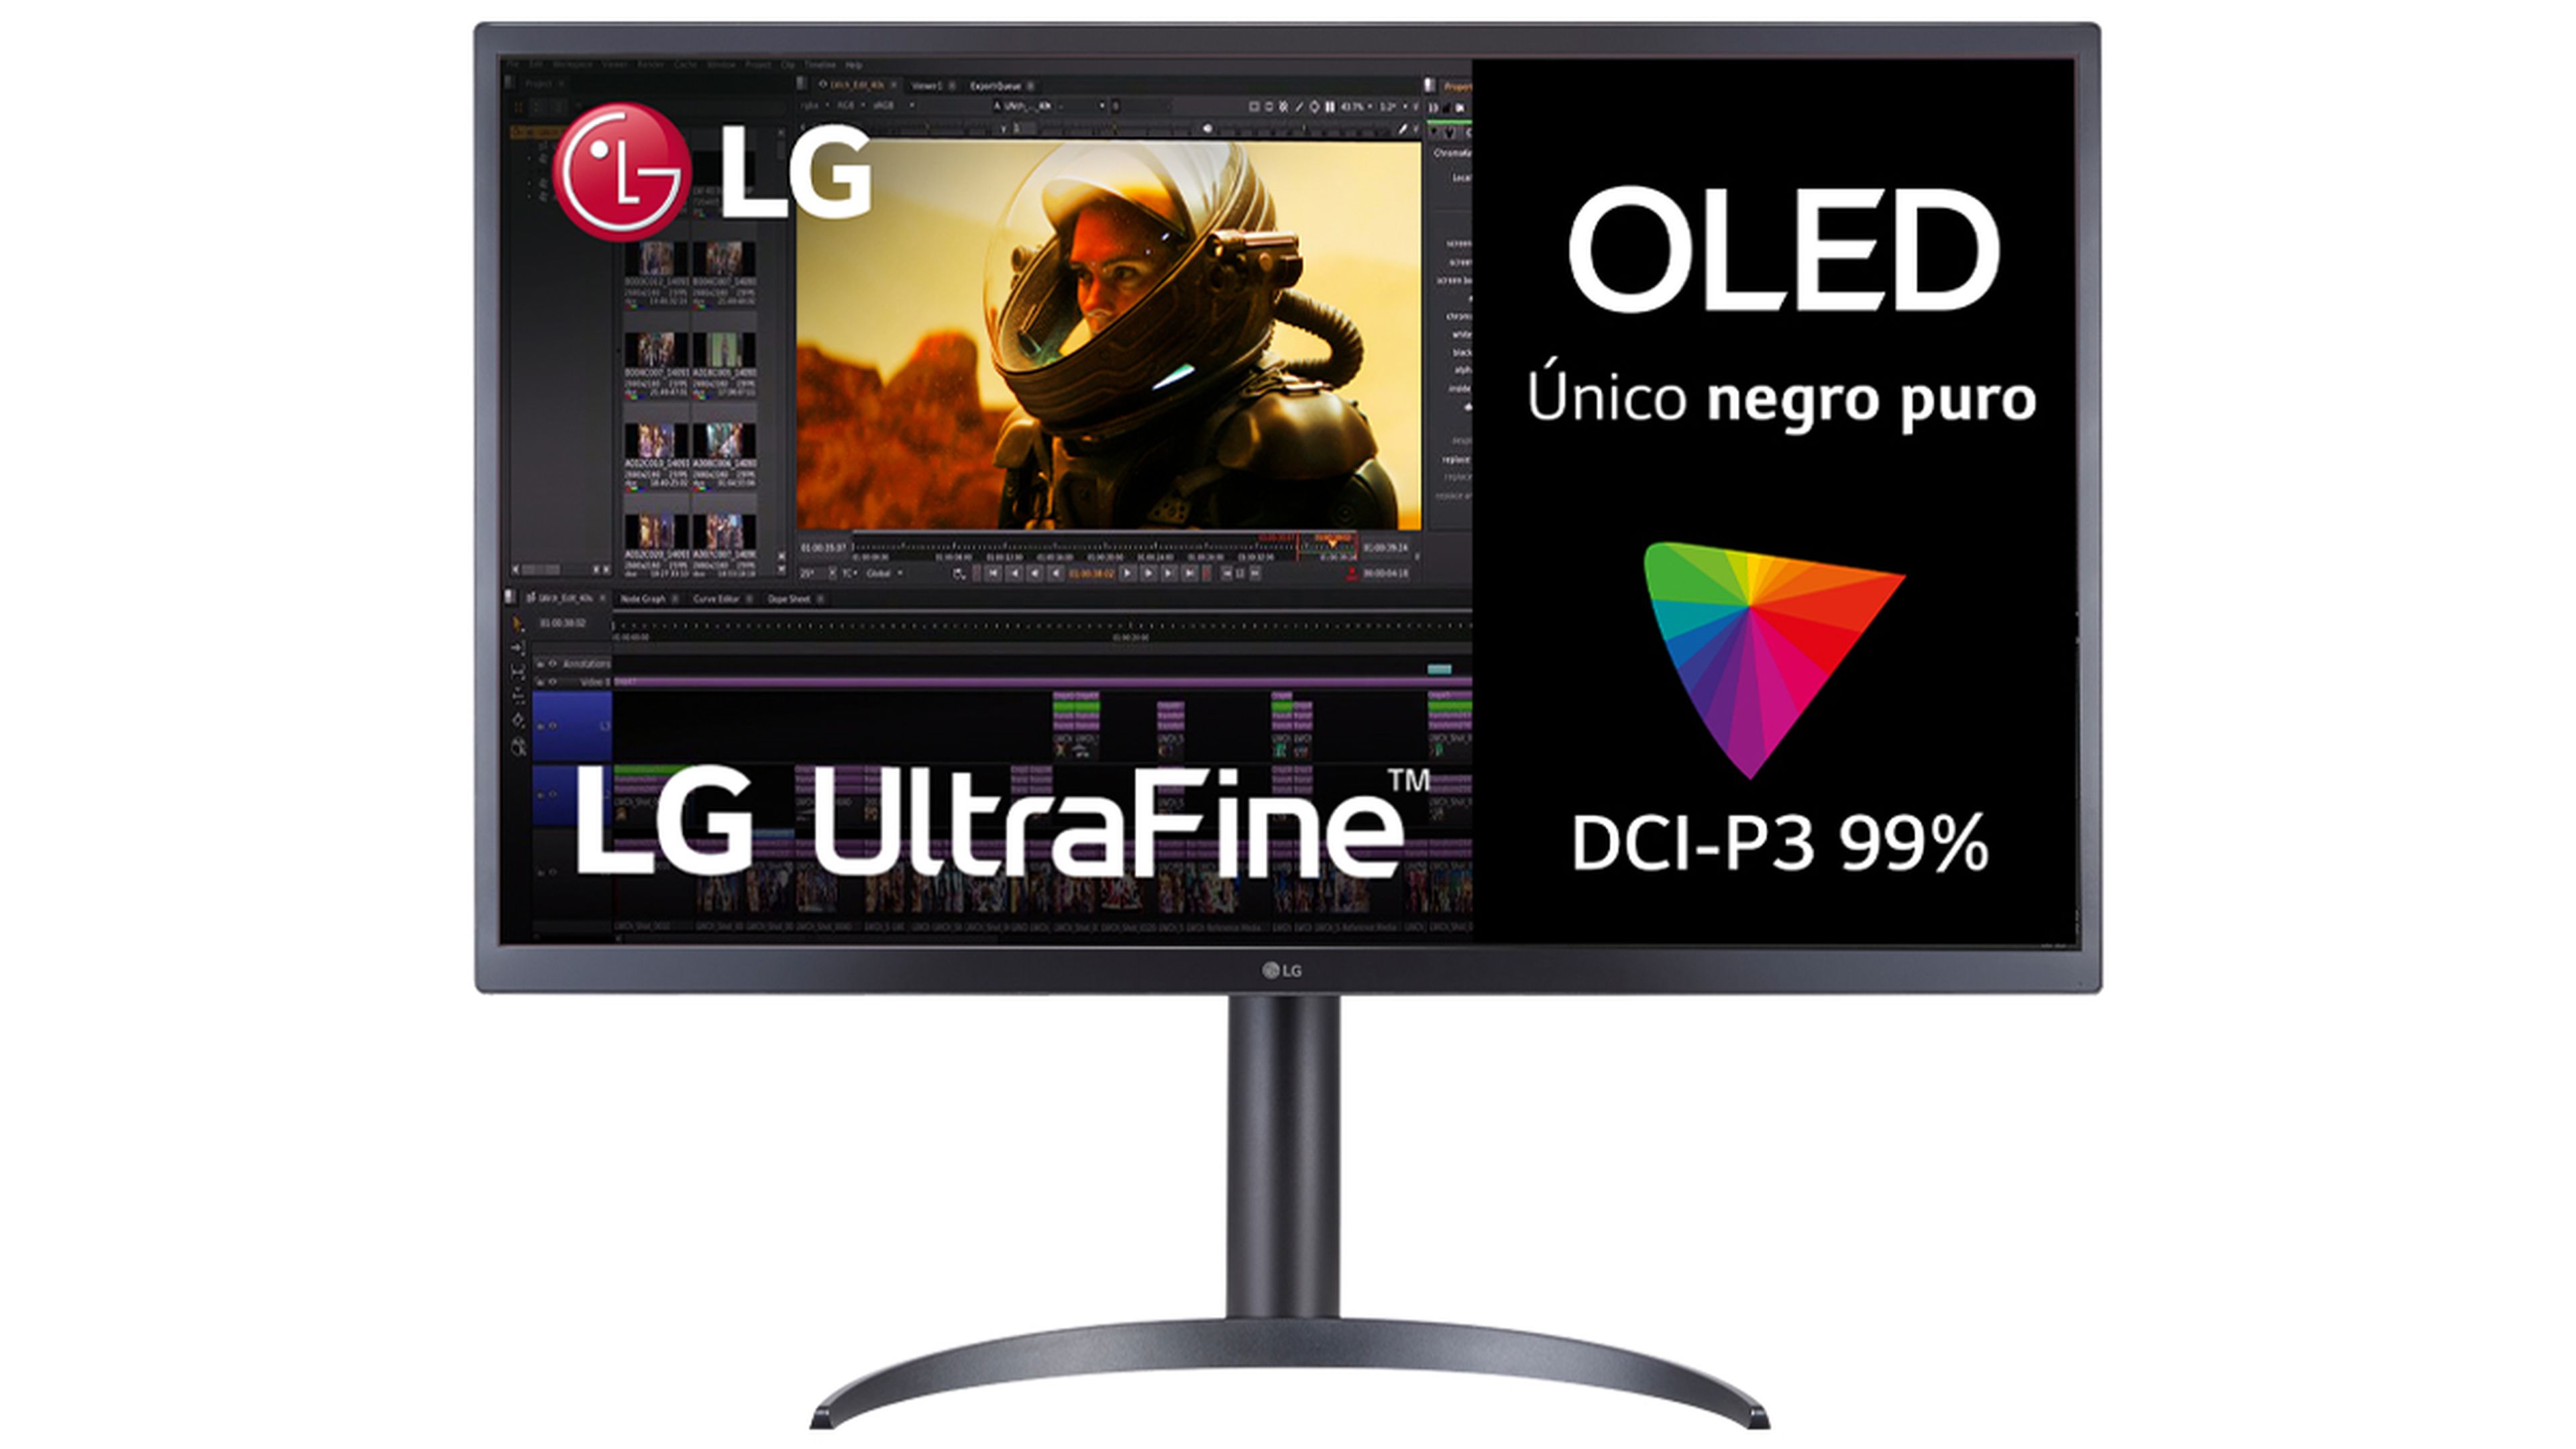 LG UltraFine OLED